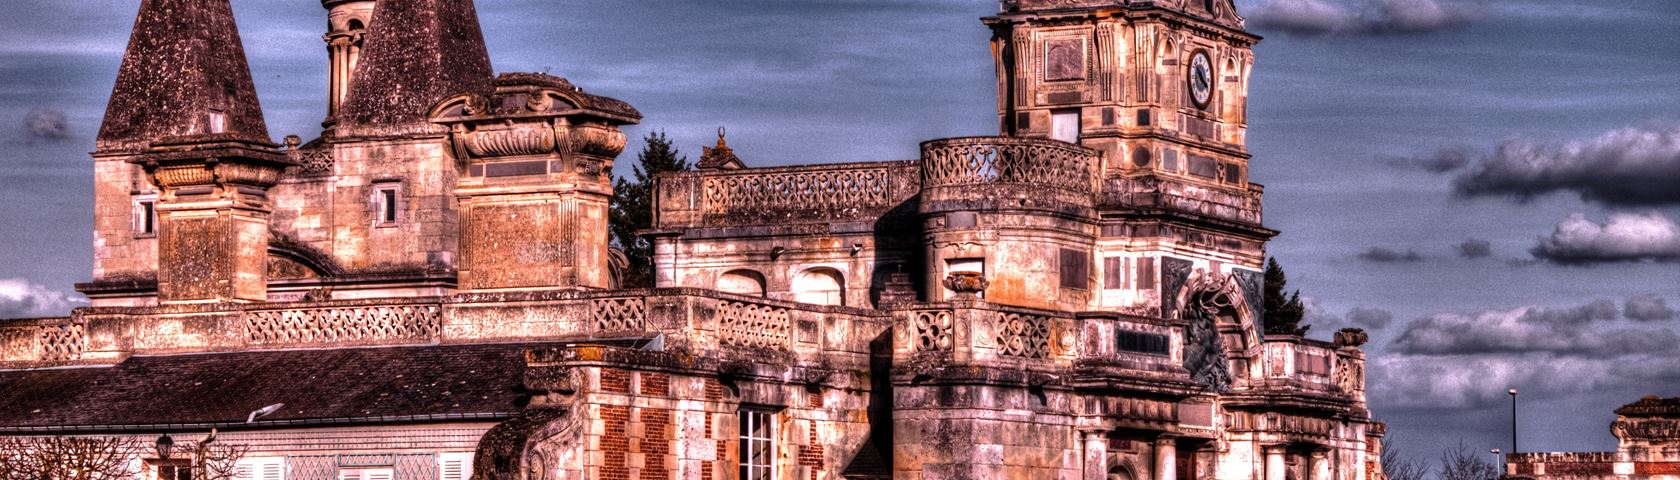 Chateau d'Anet